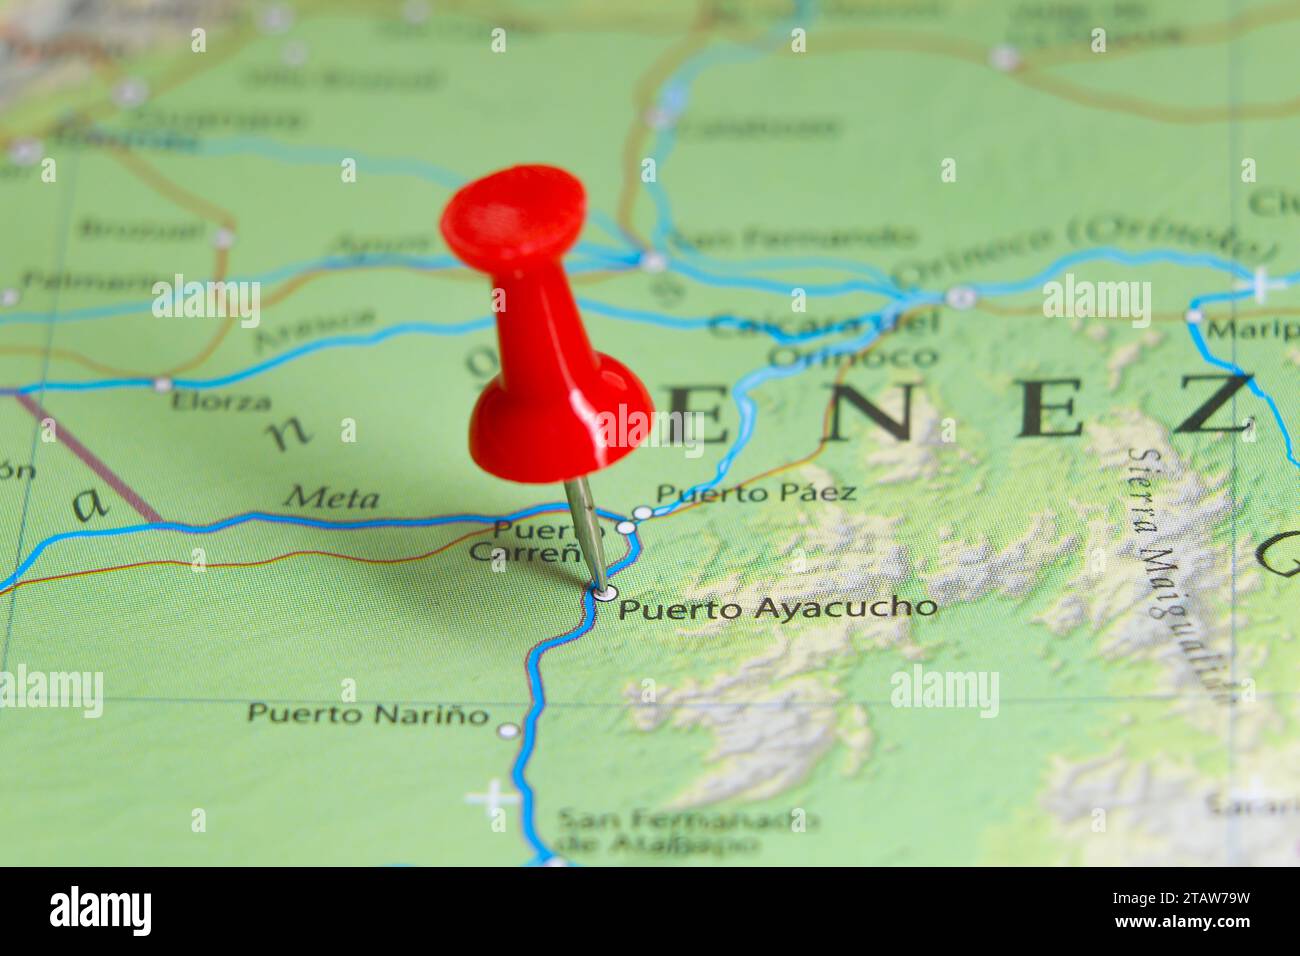 Puerto Ayacucho, Venezuela pin on map Stock Photo